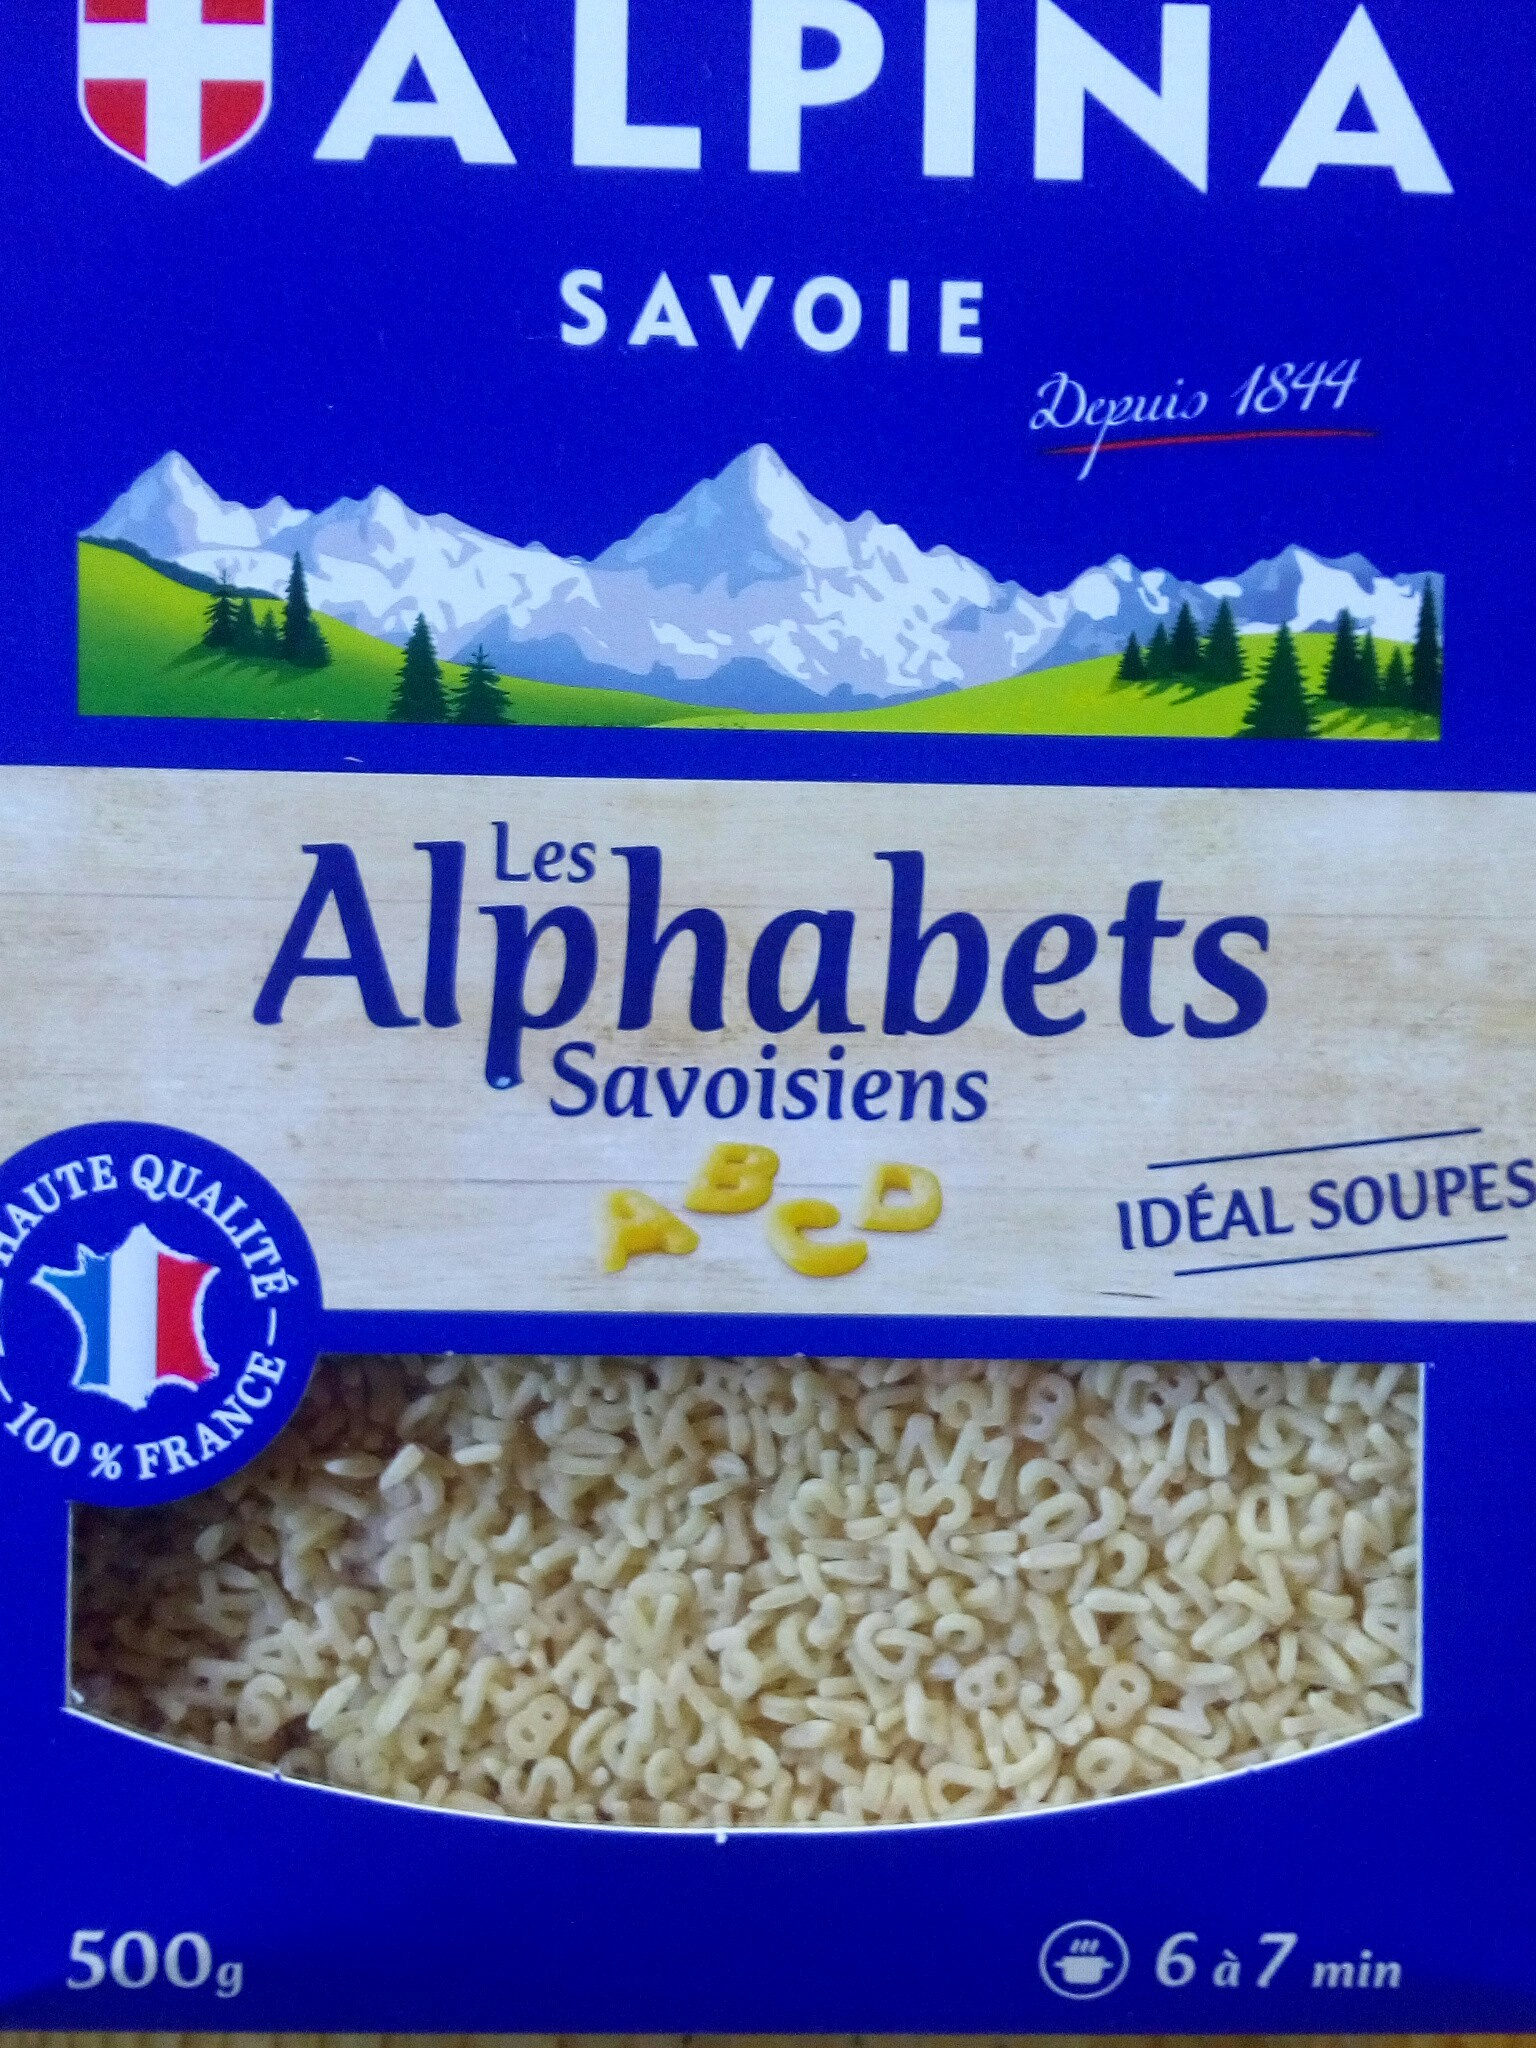 Alpina Savoie Pasta Alphabets Savoisiens (500g)